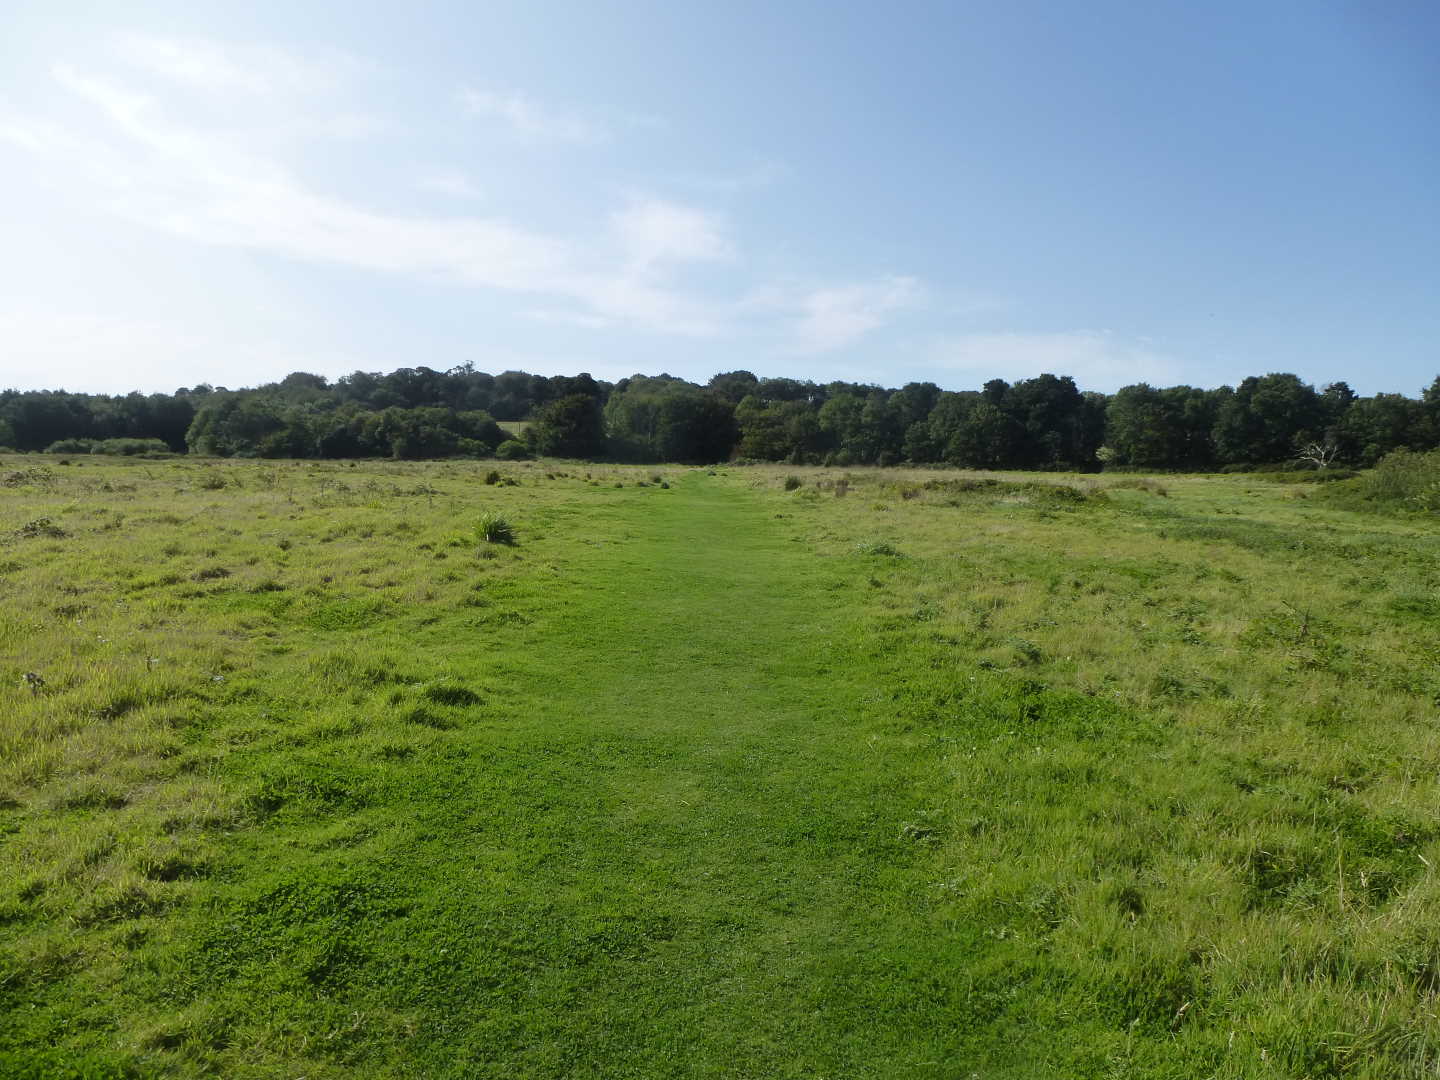 An open grassy field